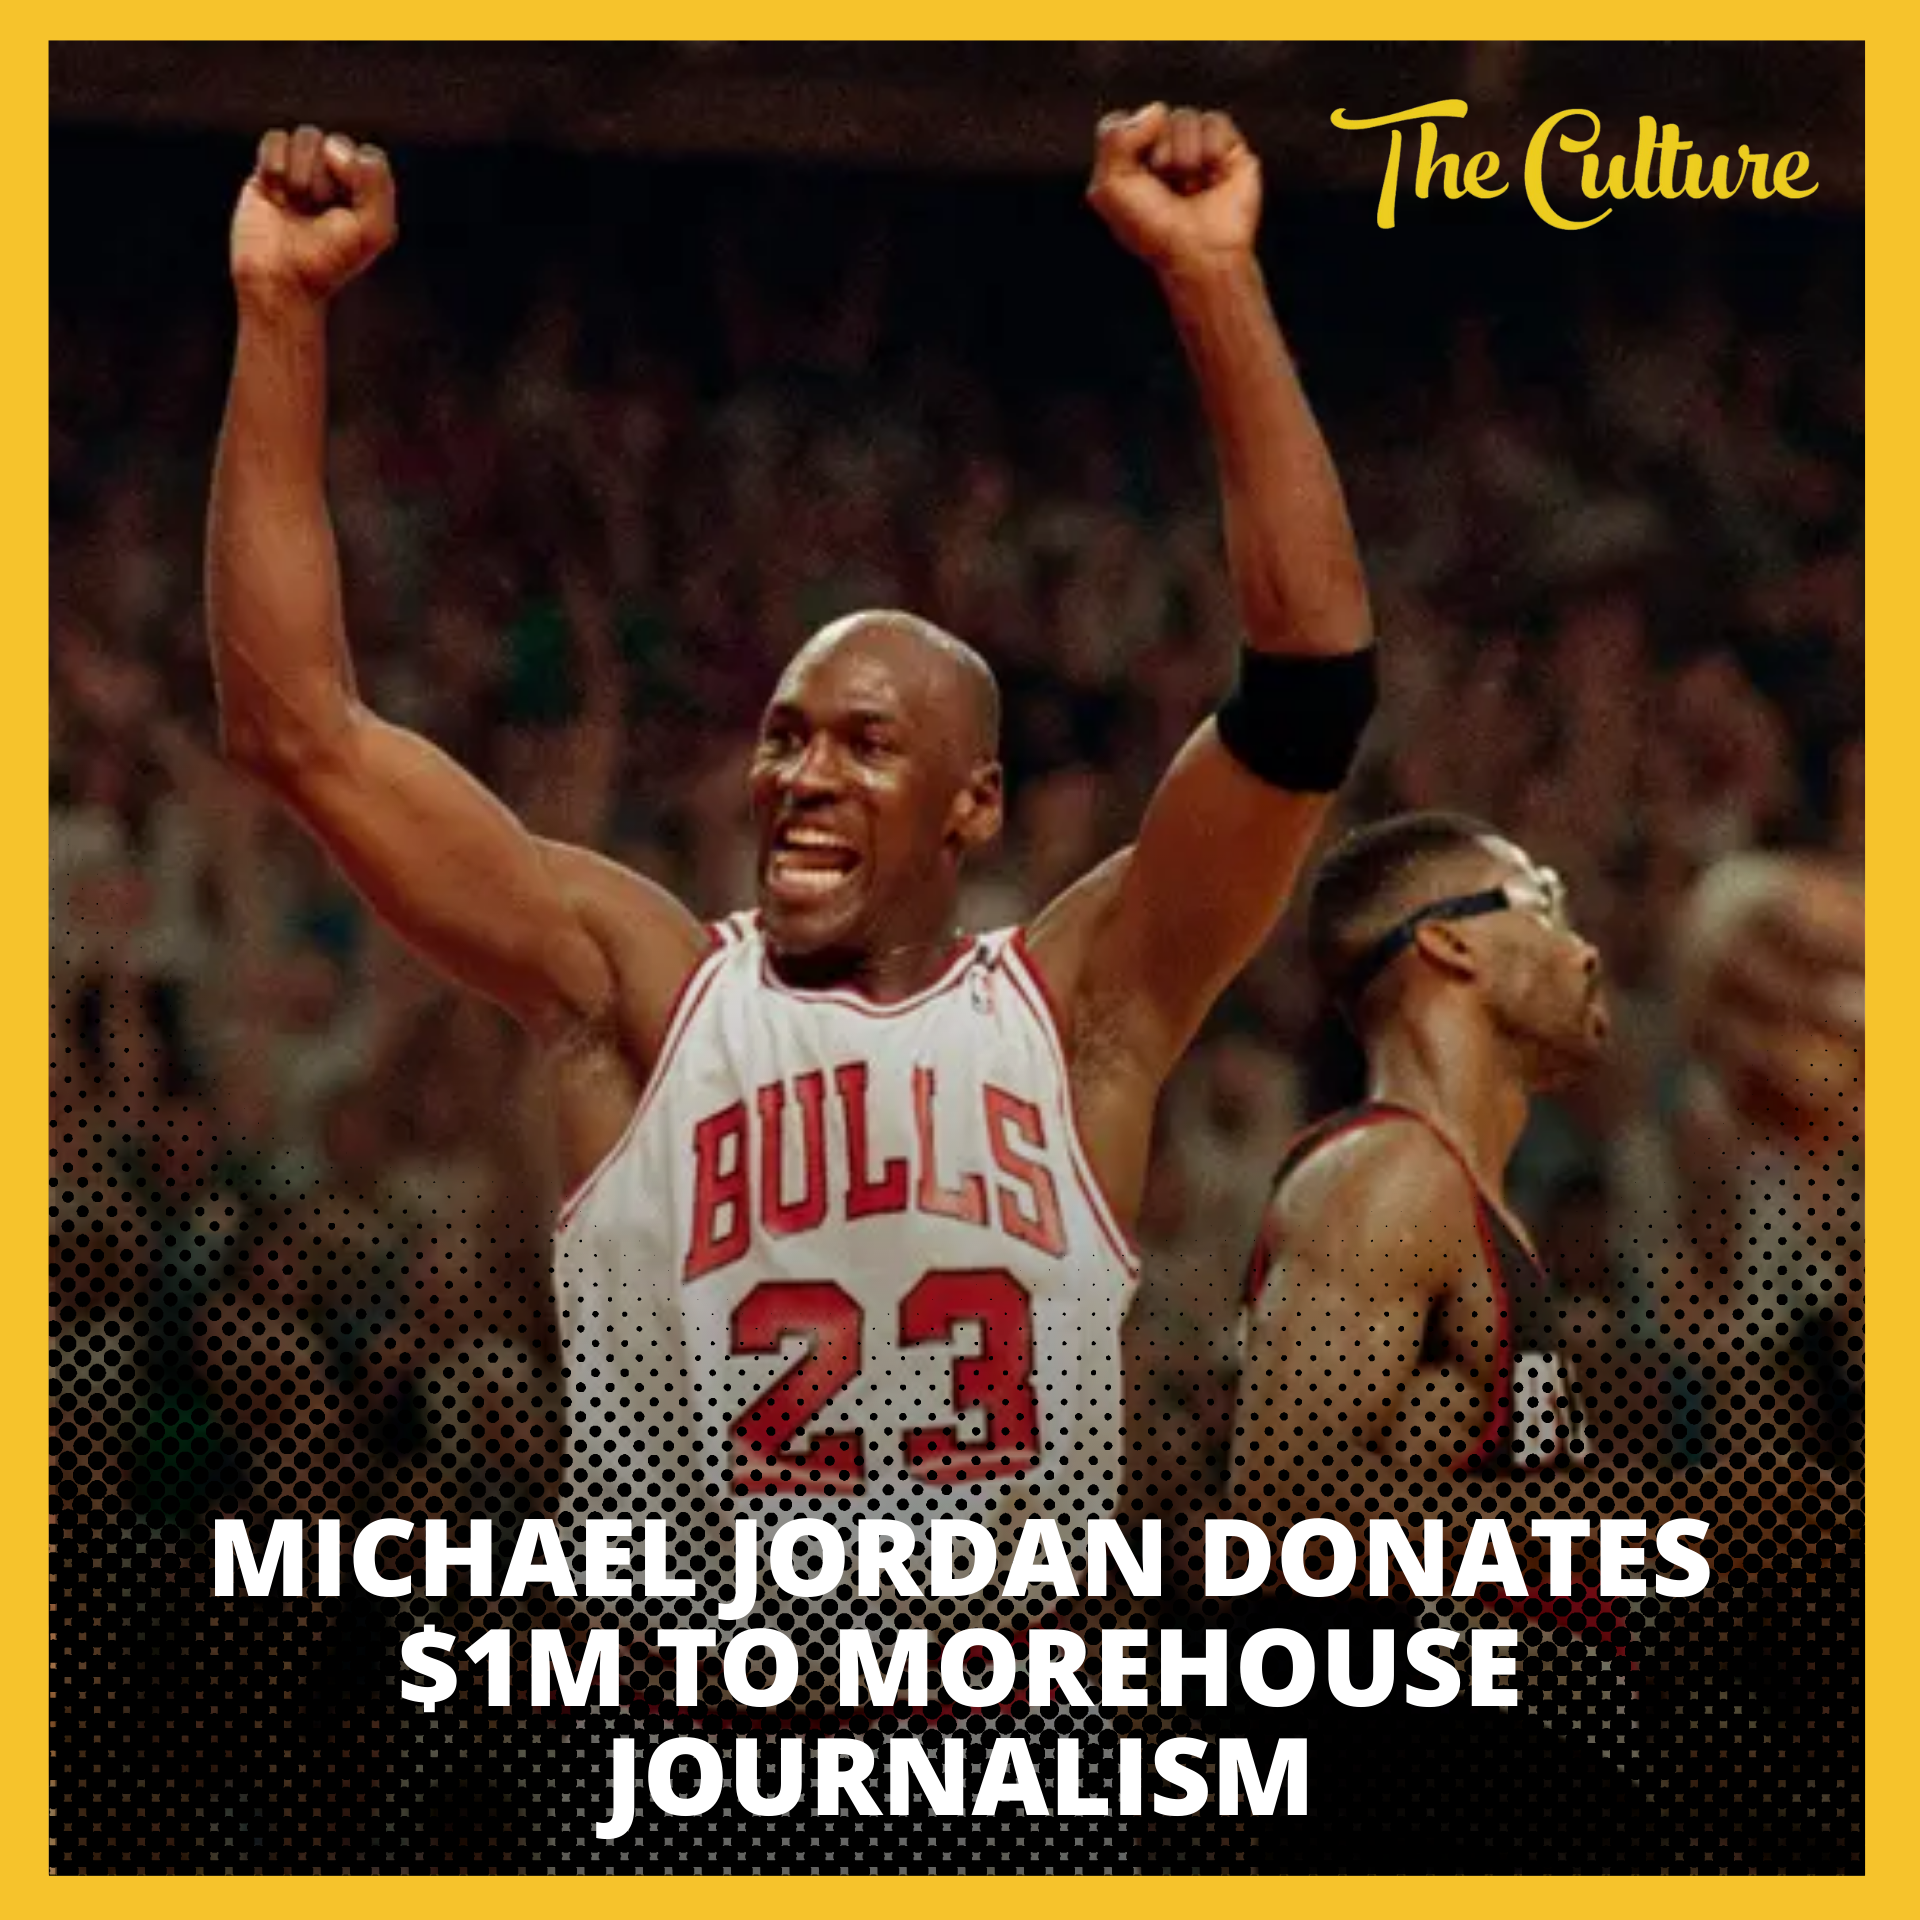 MICHAEL JORDAN AND THE JORDAN BRAND DONATE $1M TO MOREHOUSE'S JOURNALISM PROGRAM